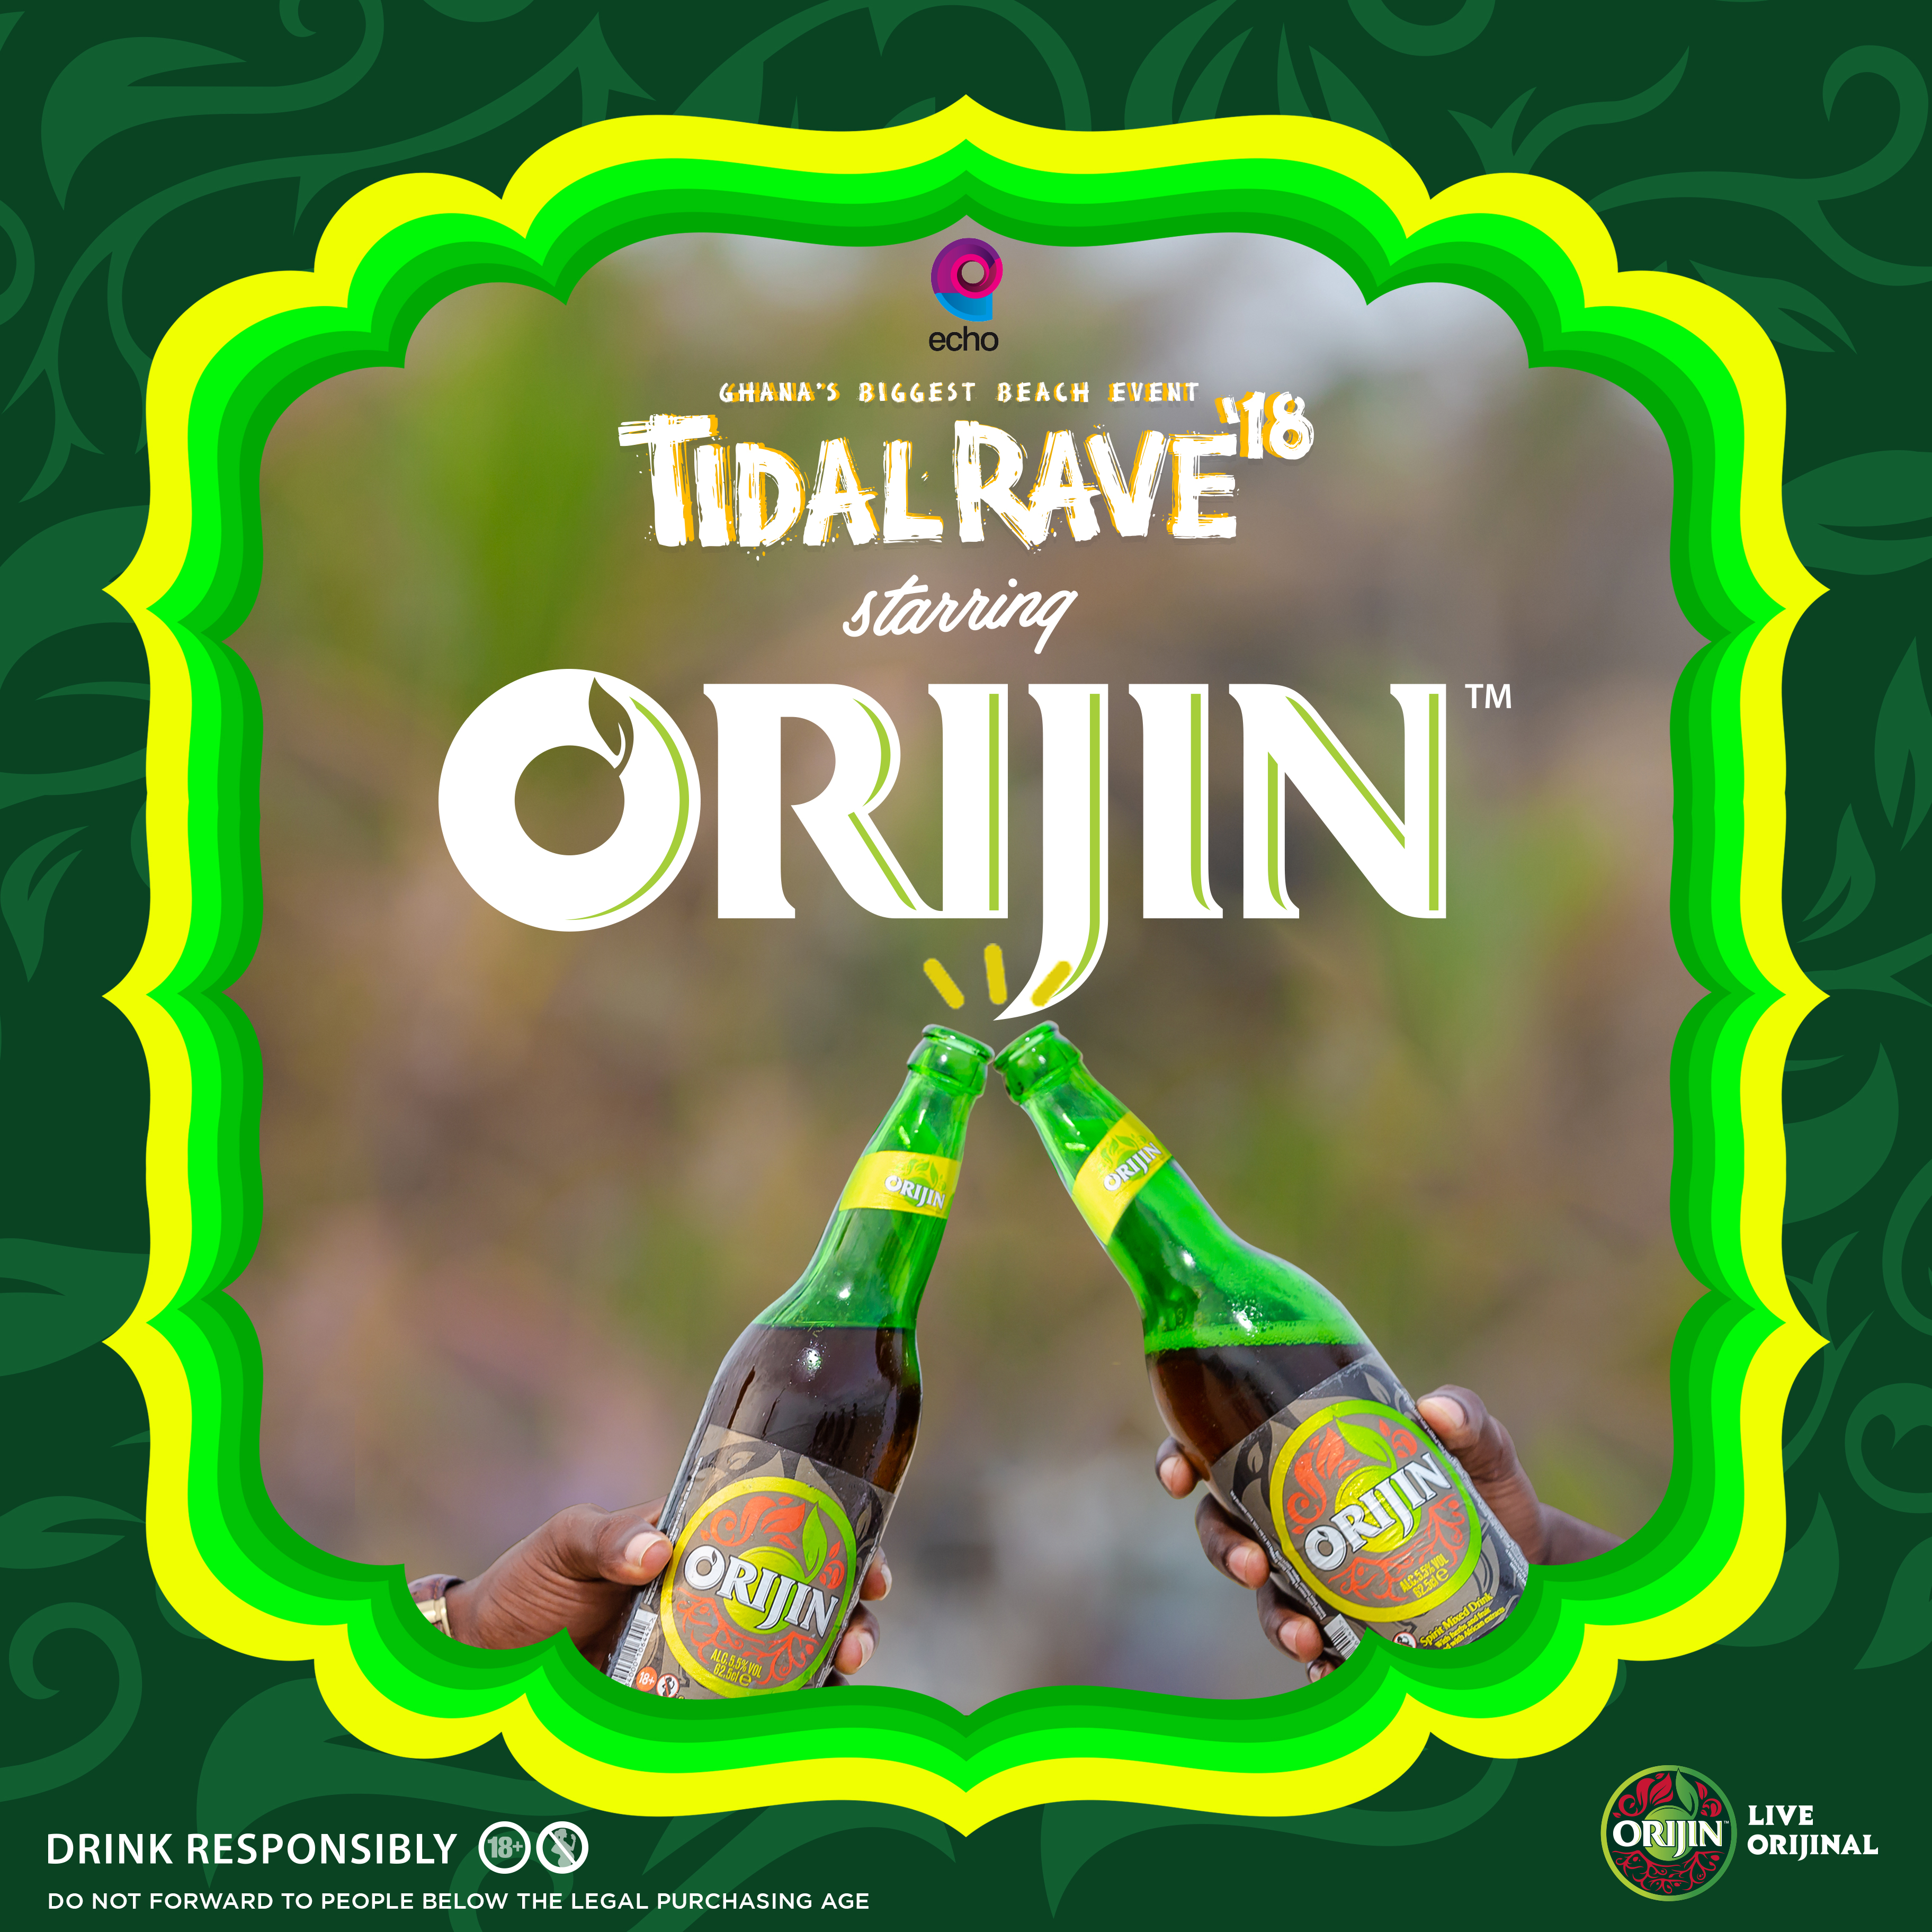 The Orijinal 7 wonders at Tidal Rave